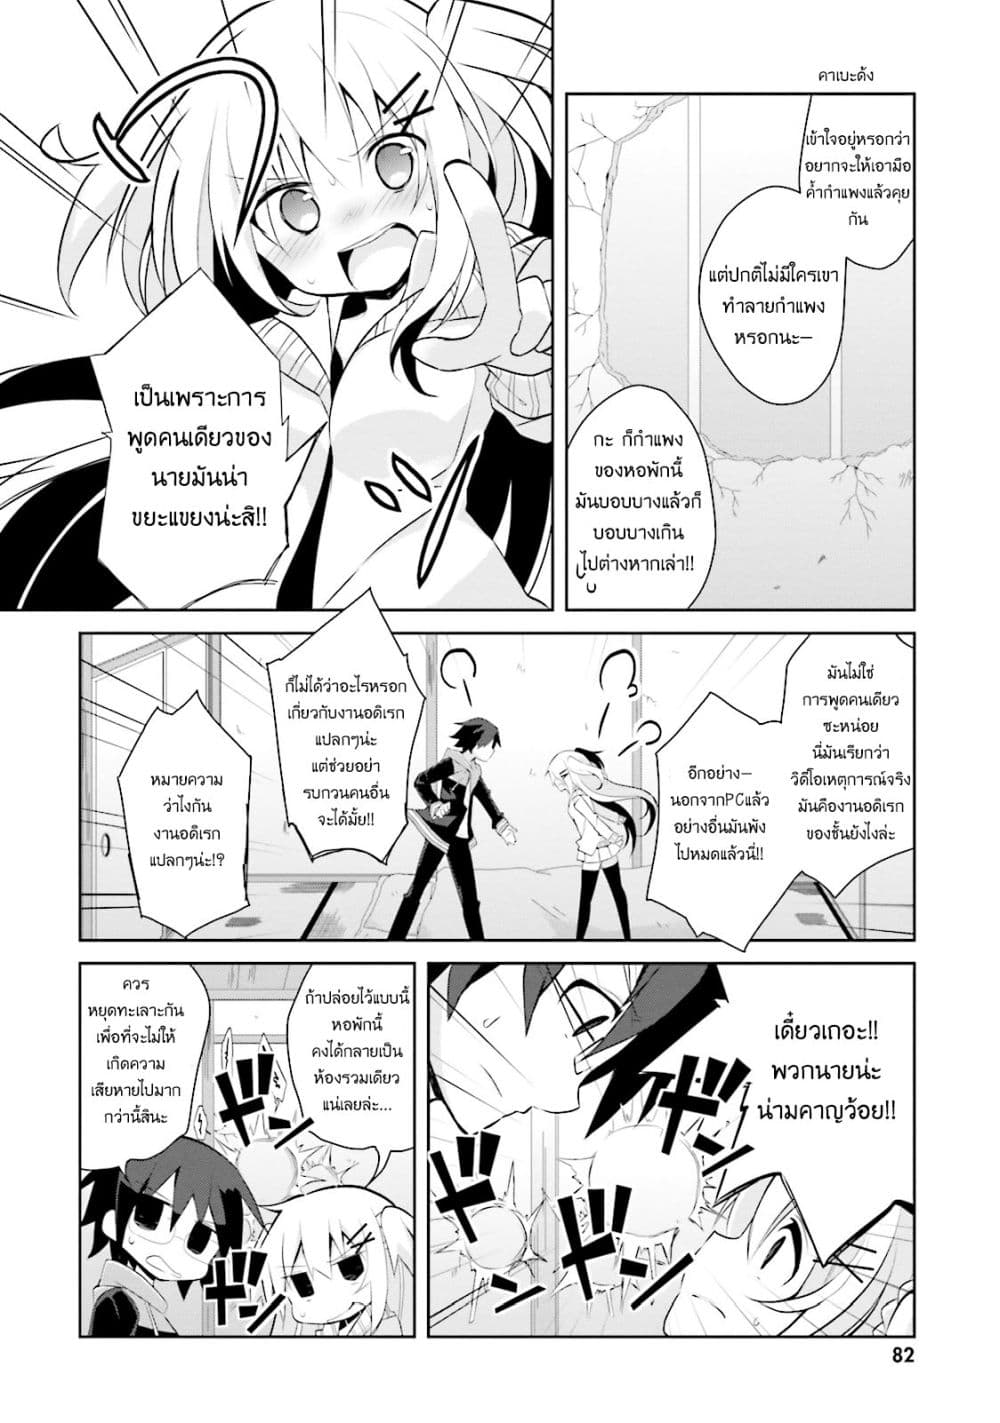 Aragami-sama no Inou Sekai 3-3